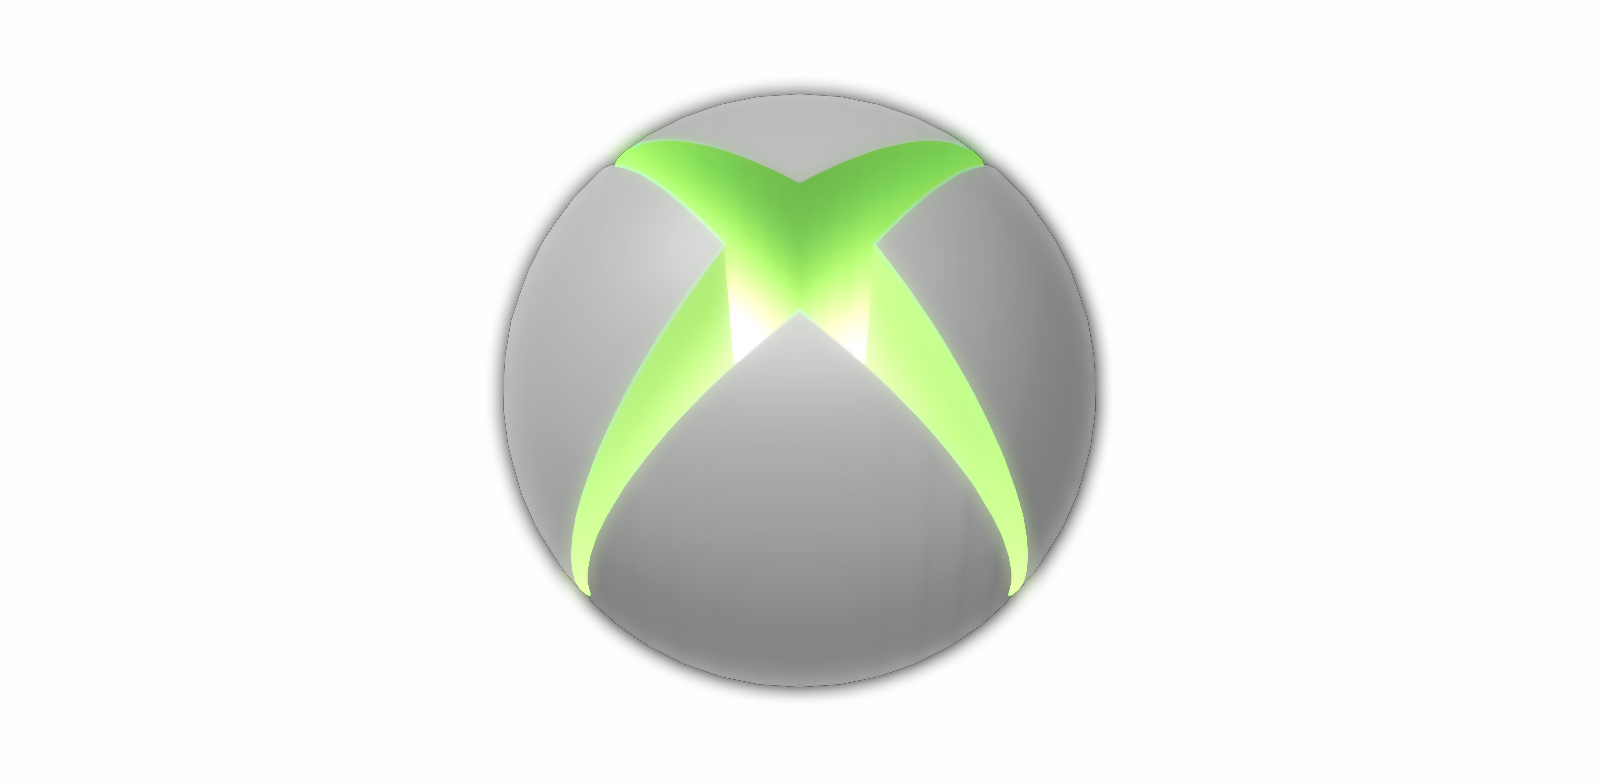 xbox 360 logo png